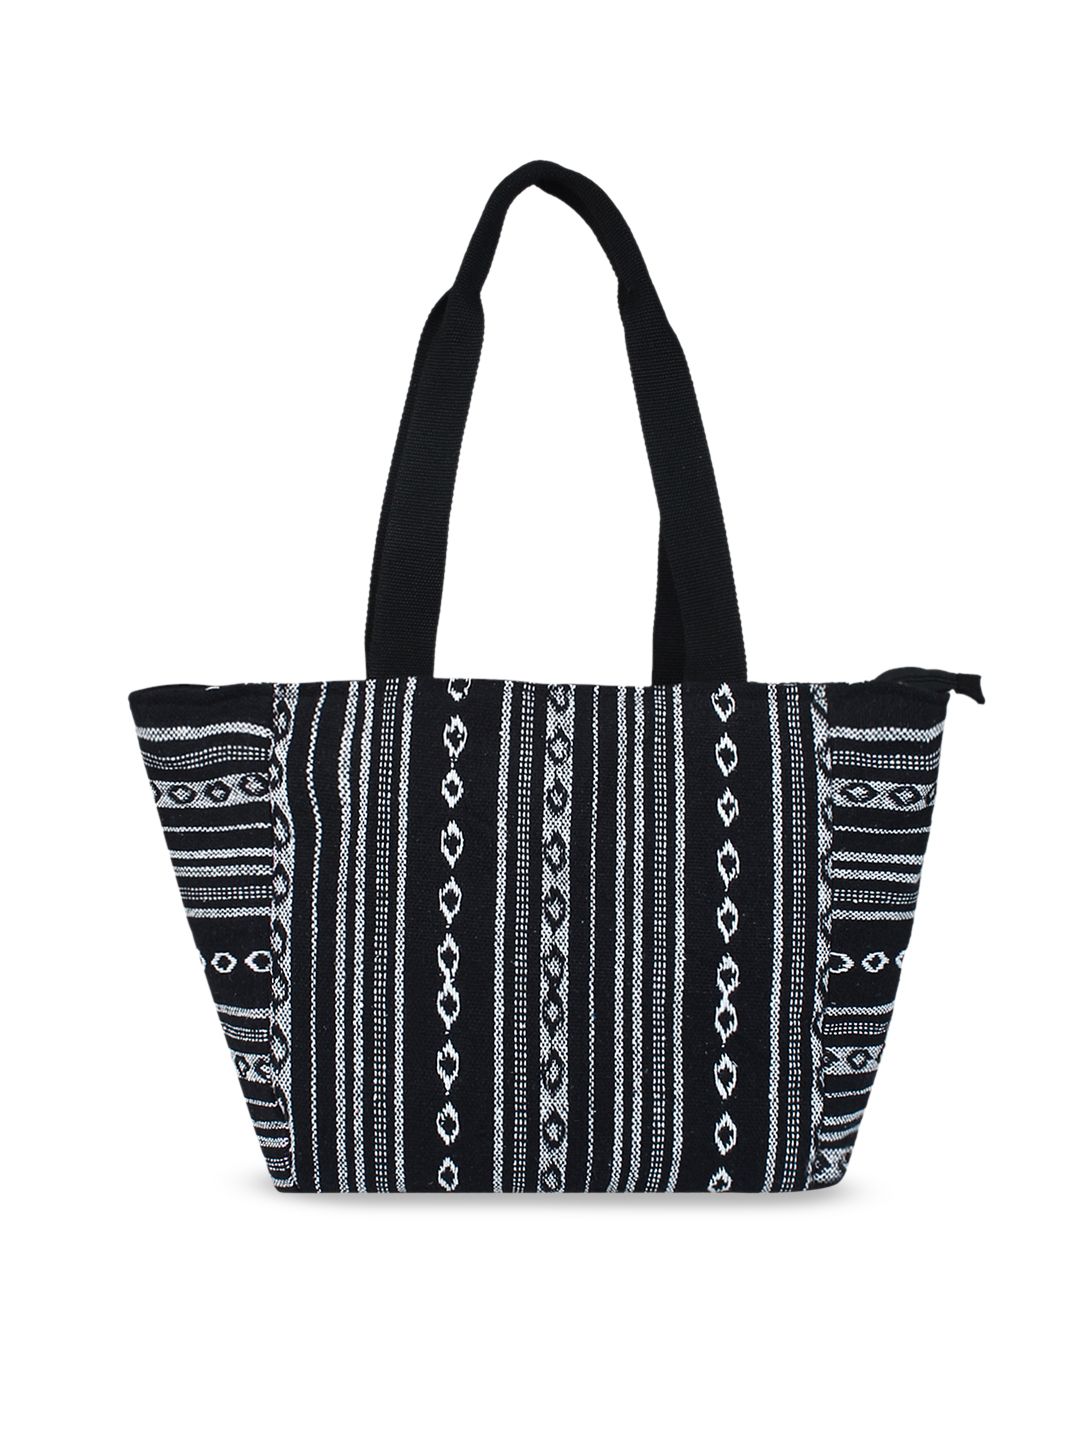 Anekaant Black & White Self Design Shoulder Bag Price in India